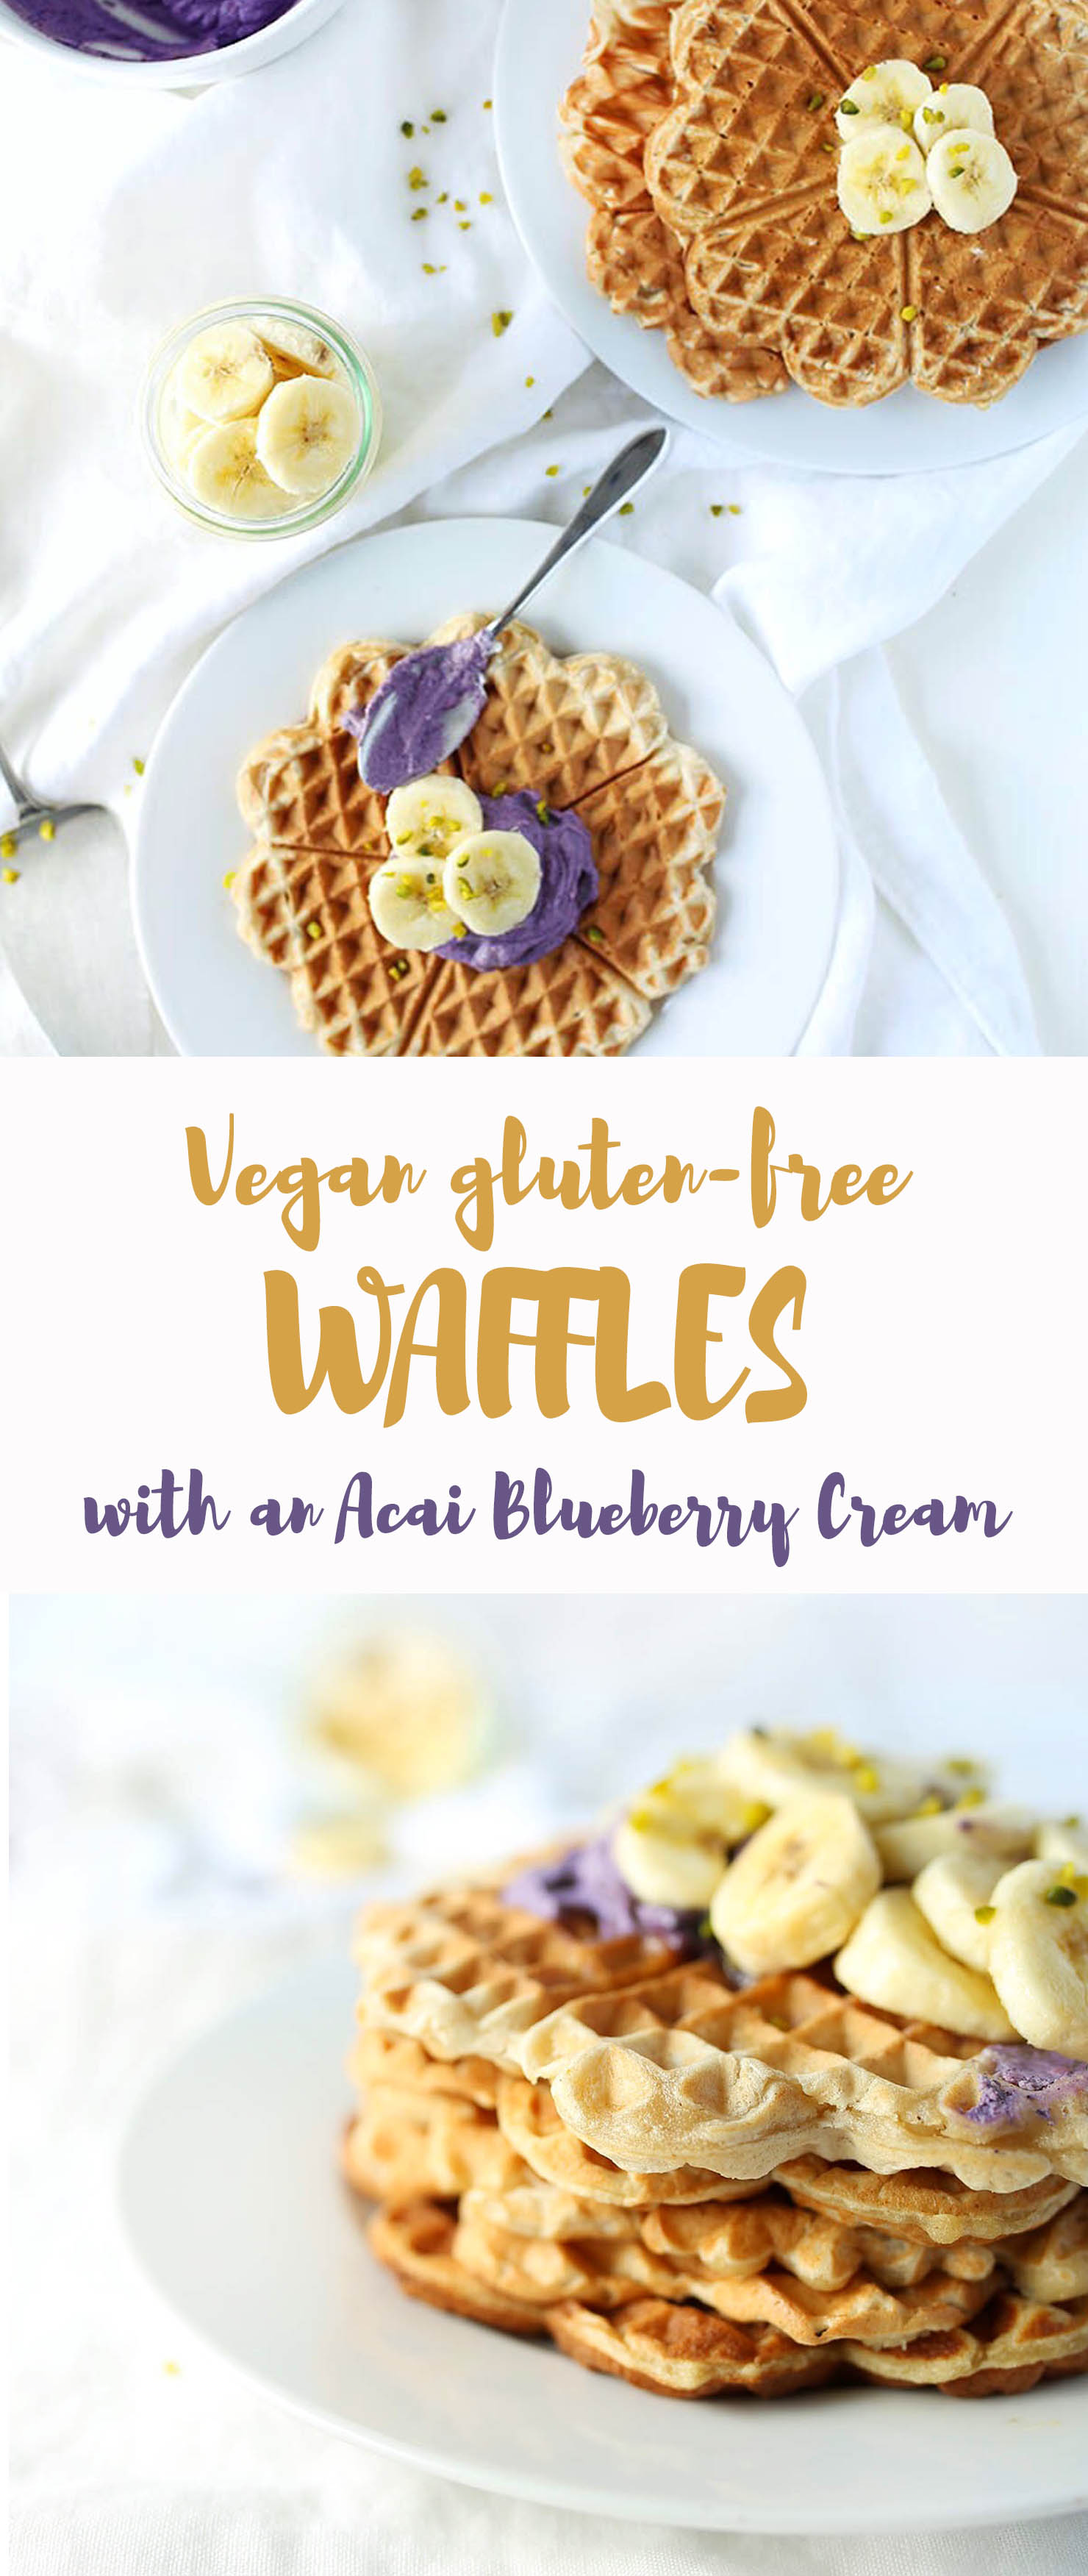 Easy vegan gluten-free Waffles with an antioxidant blueberry cream